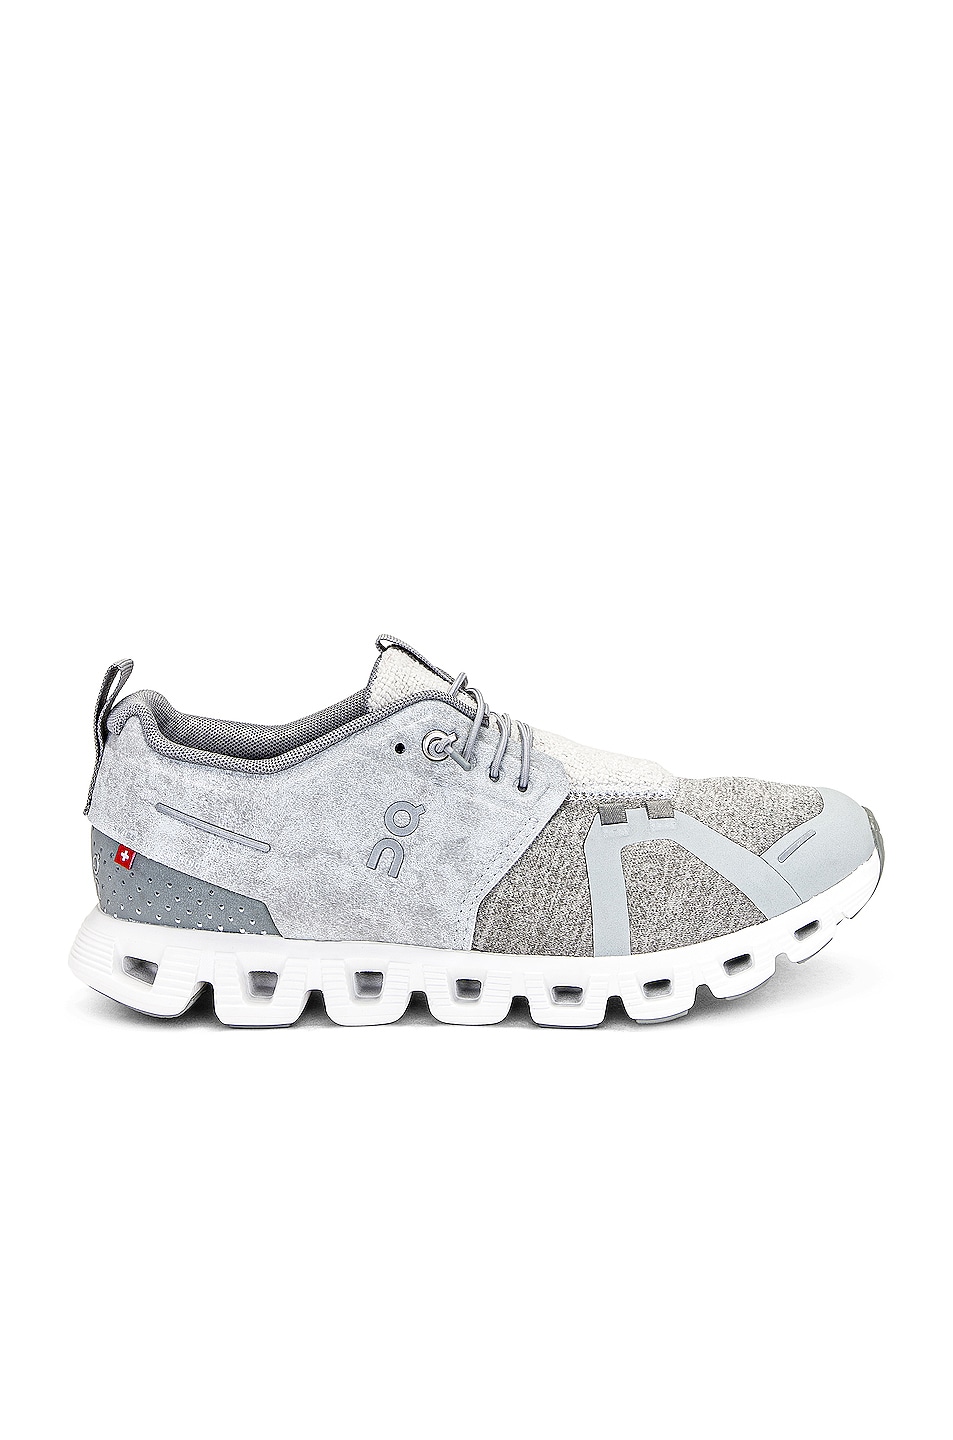 Image 1 of On Cloud 5 Terry Sneaker in Glacier & Lunar